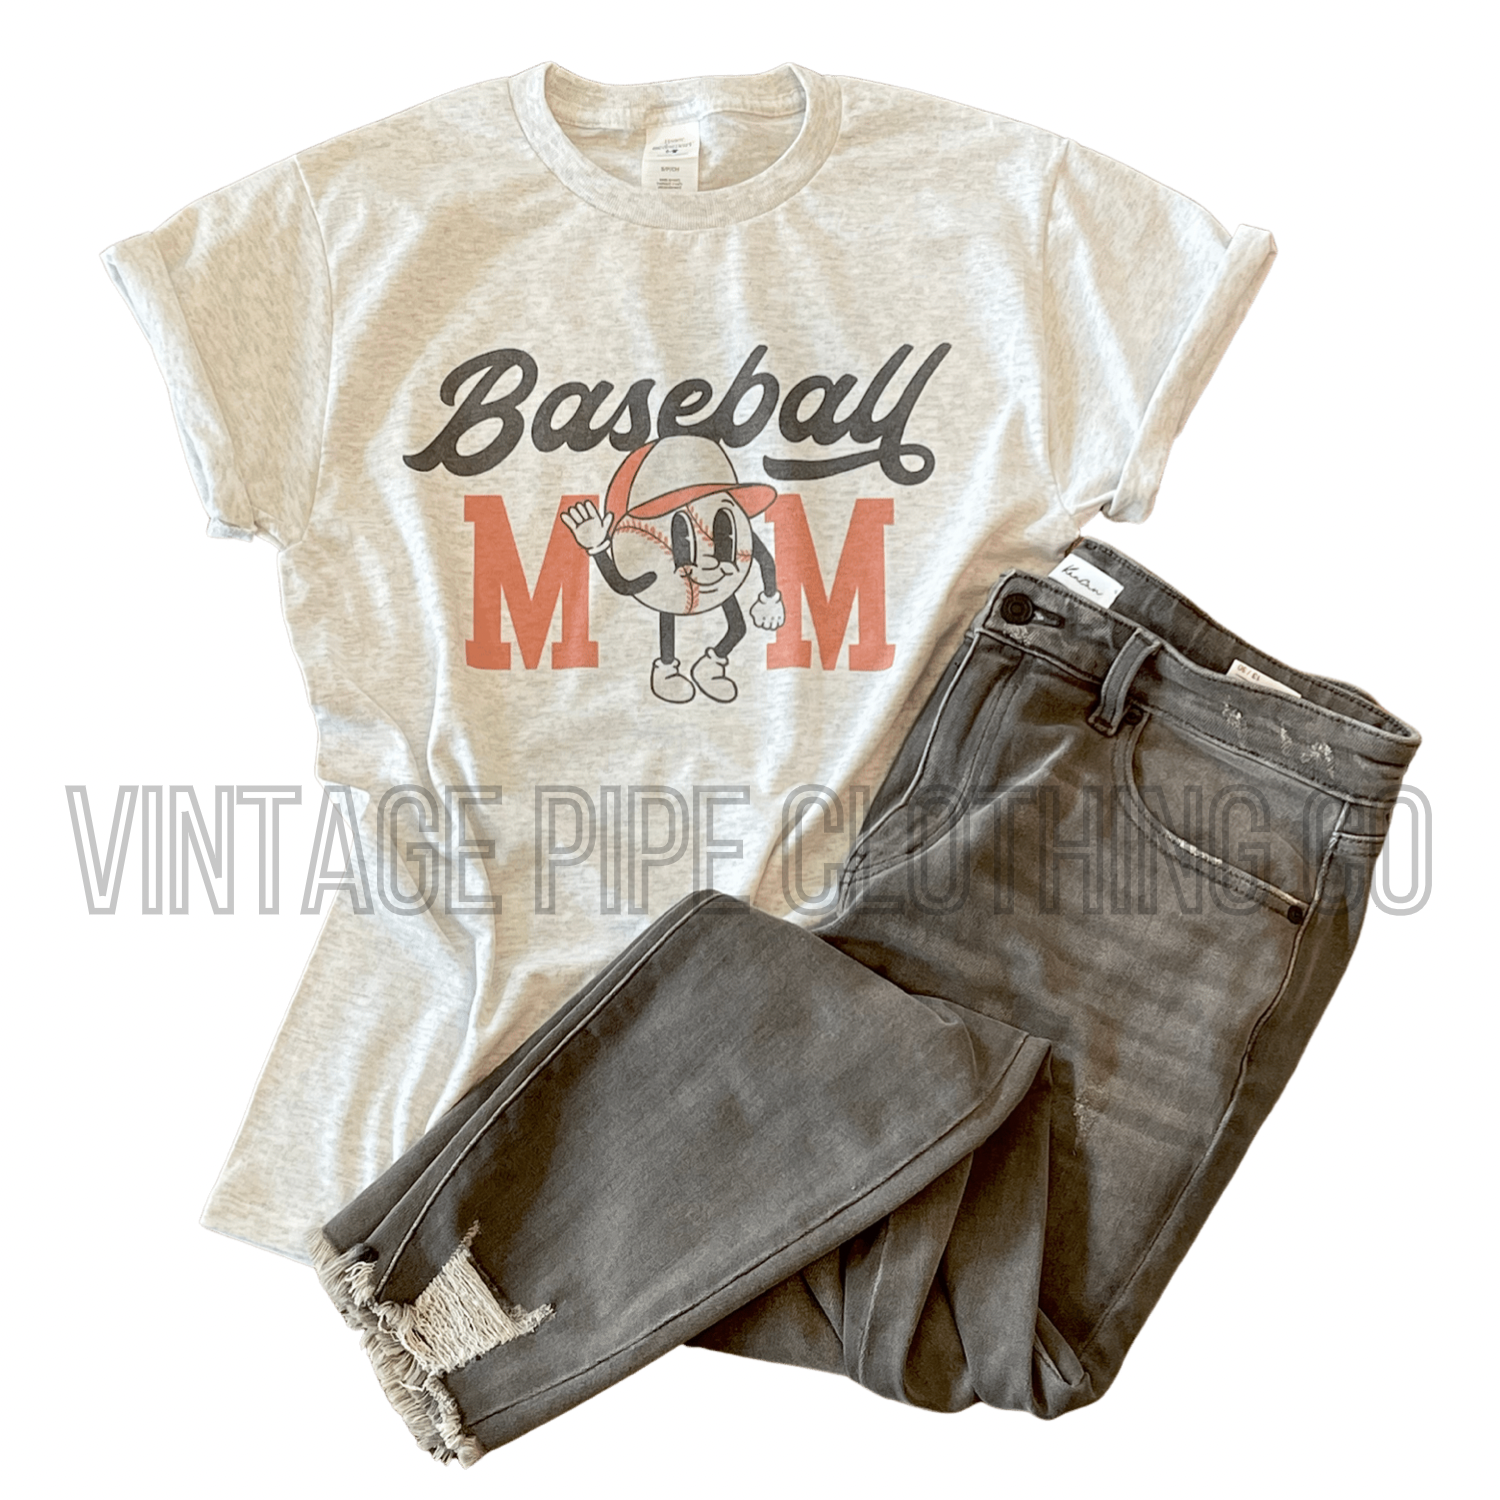 Vintage Wash Baseball Mom Tee